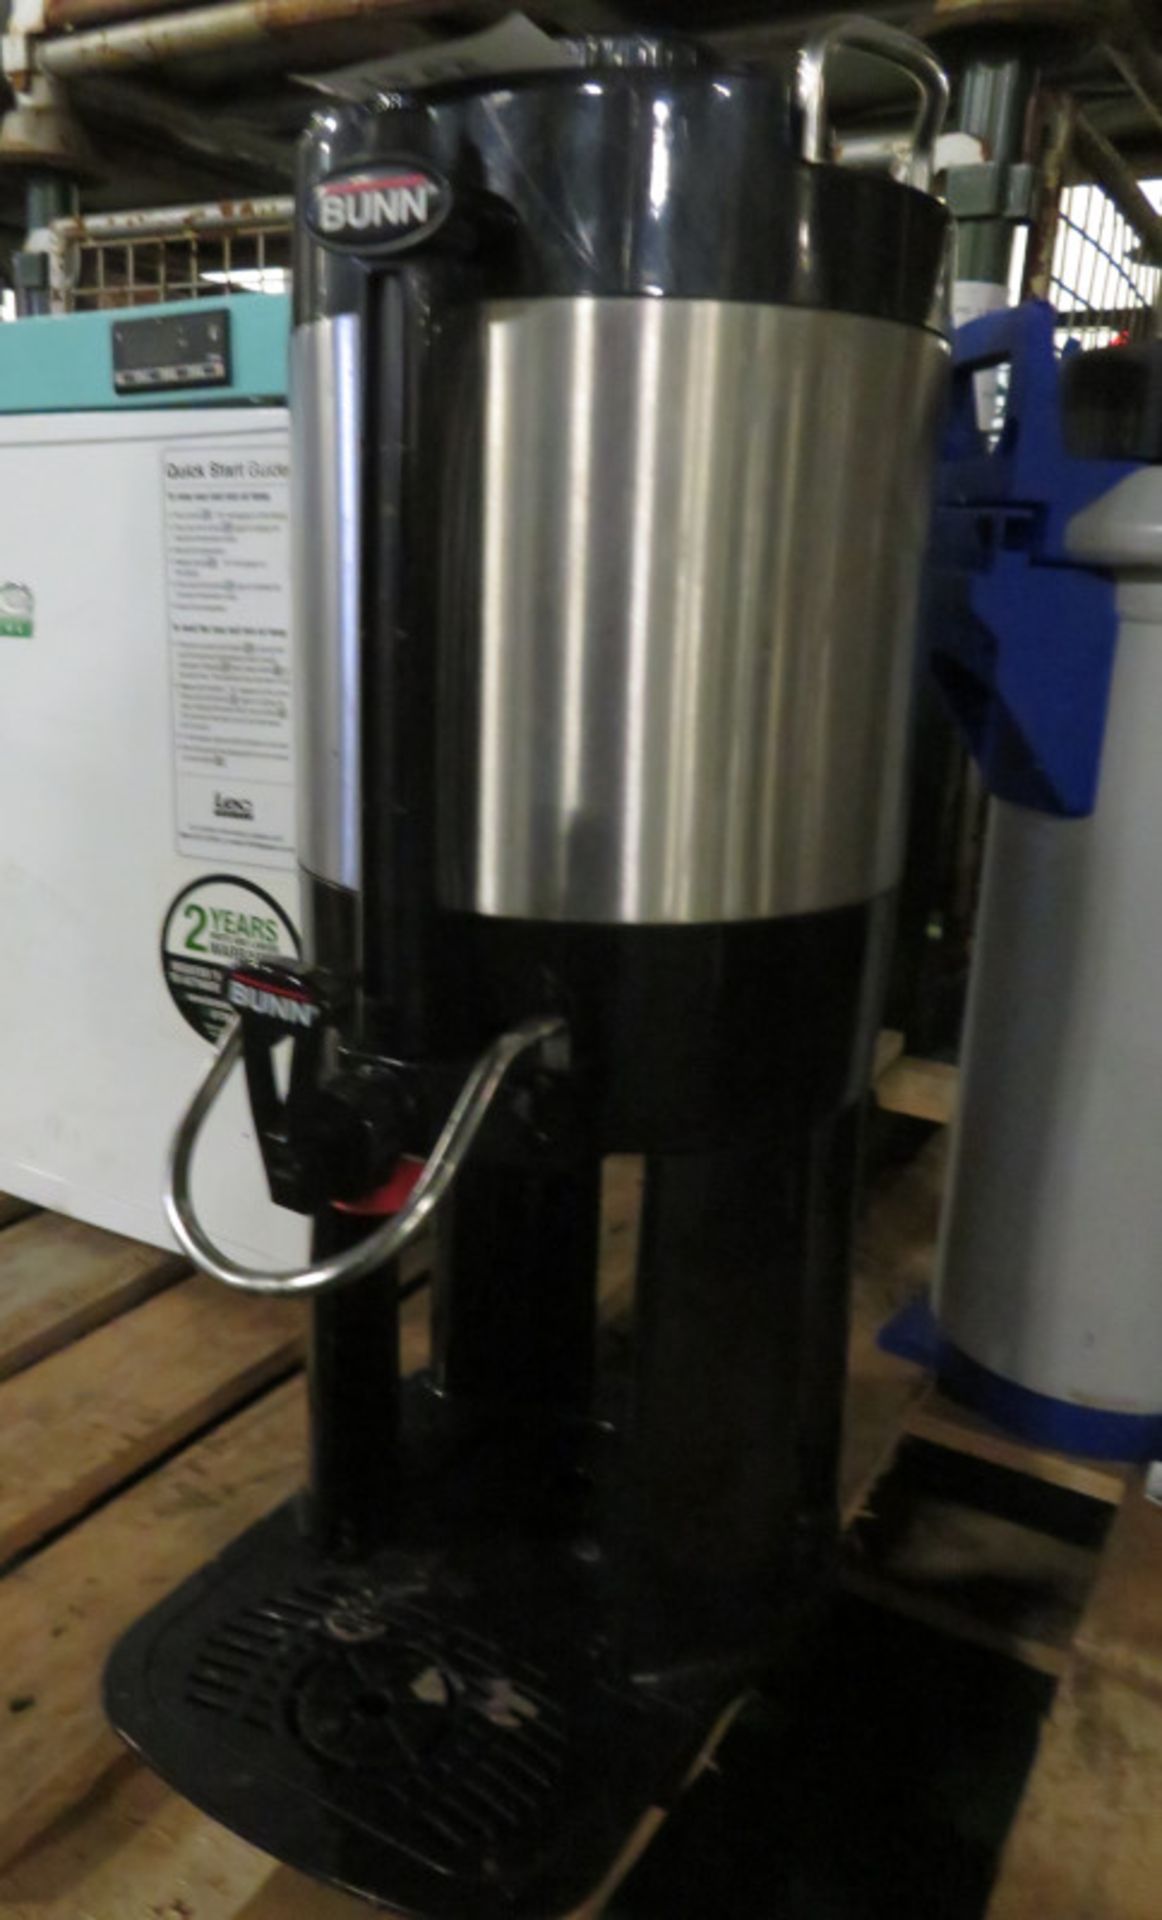 Bunn Water Boiler with Dispenser - 5.7L - Image 2 of 3